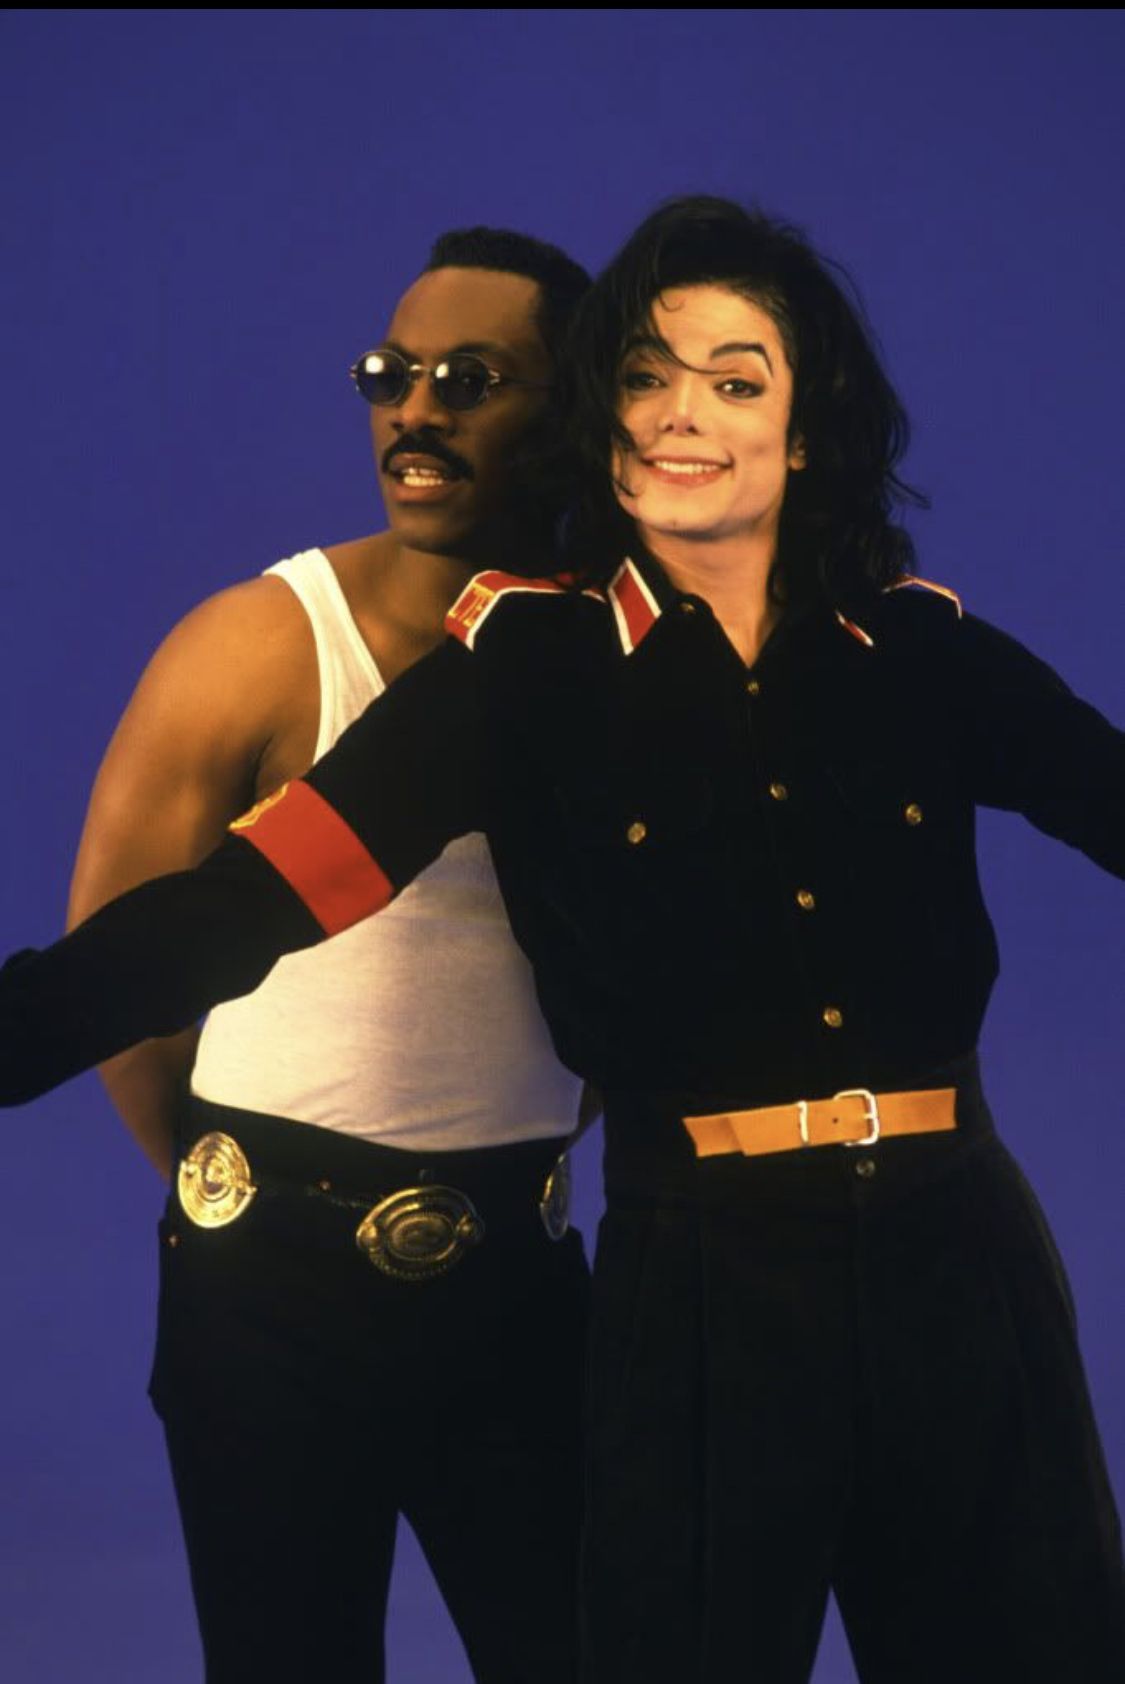 Eddie Murphy and Michael Jackson Together